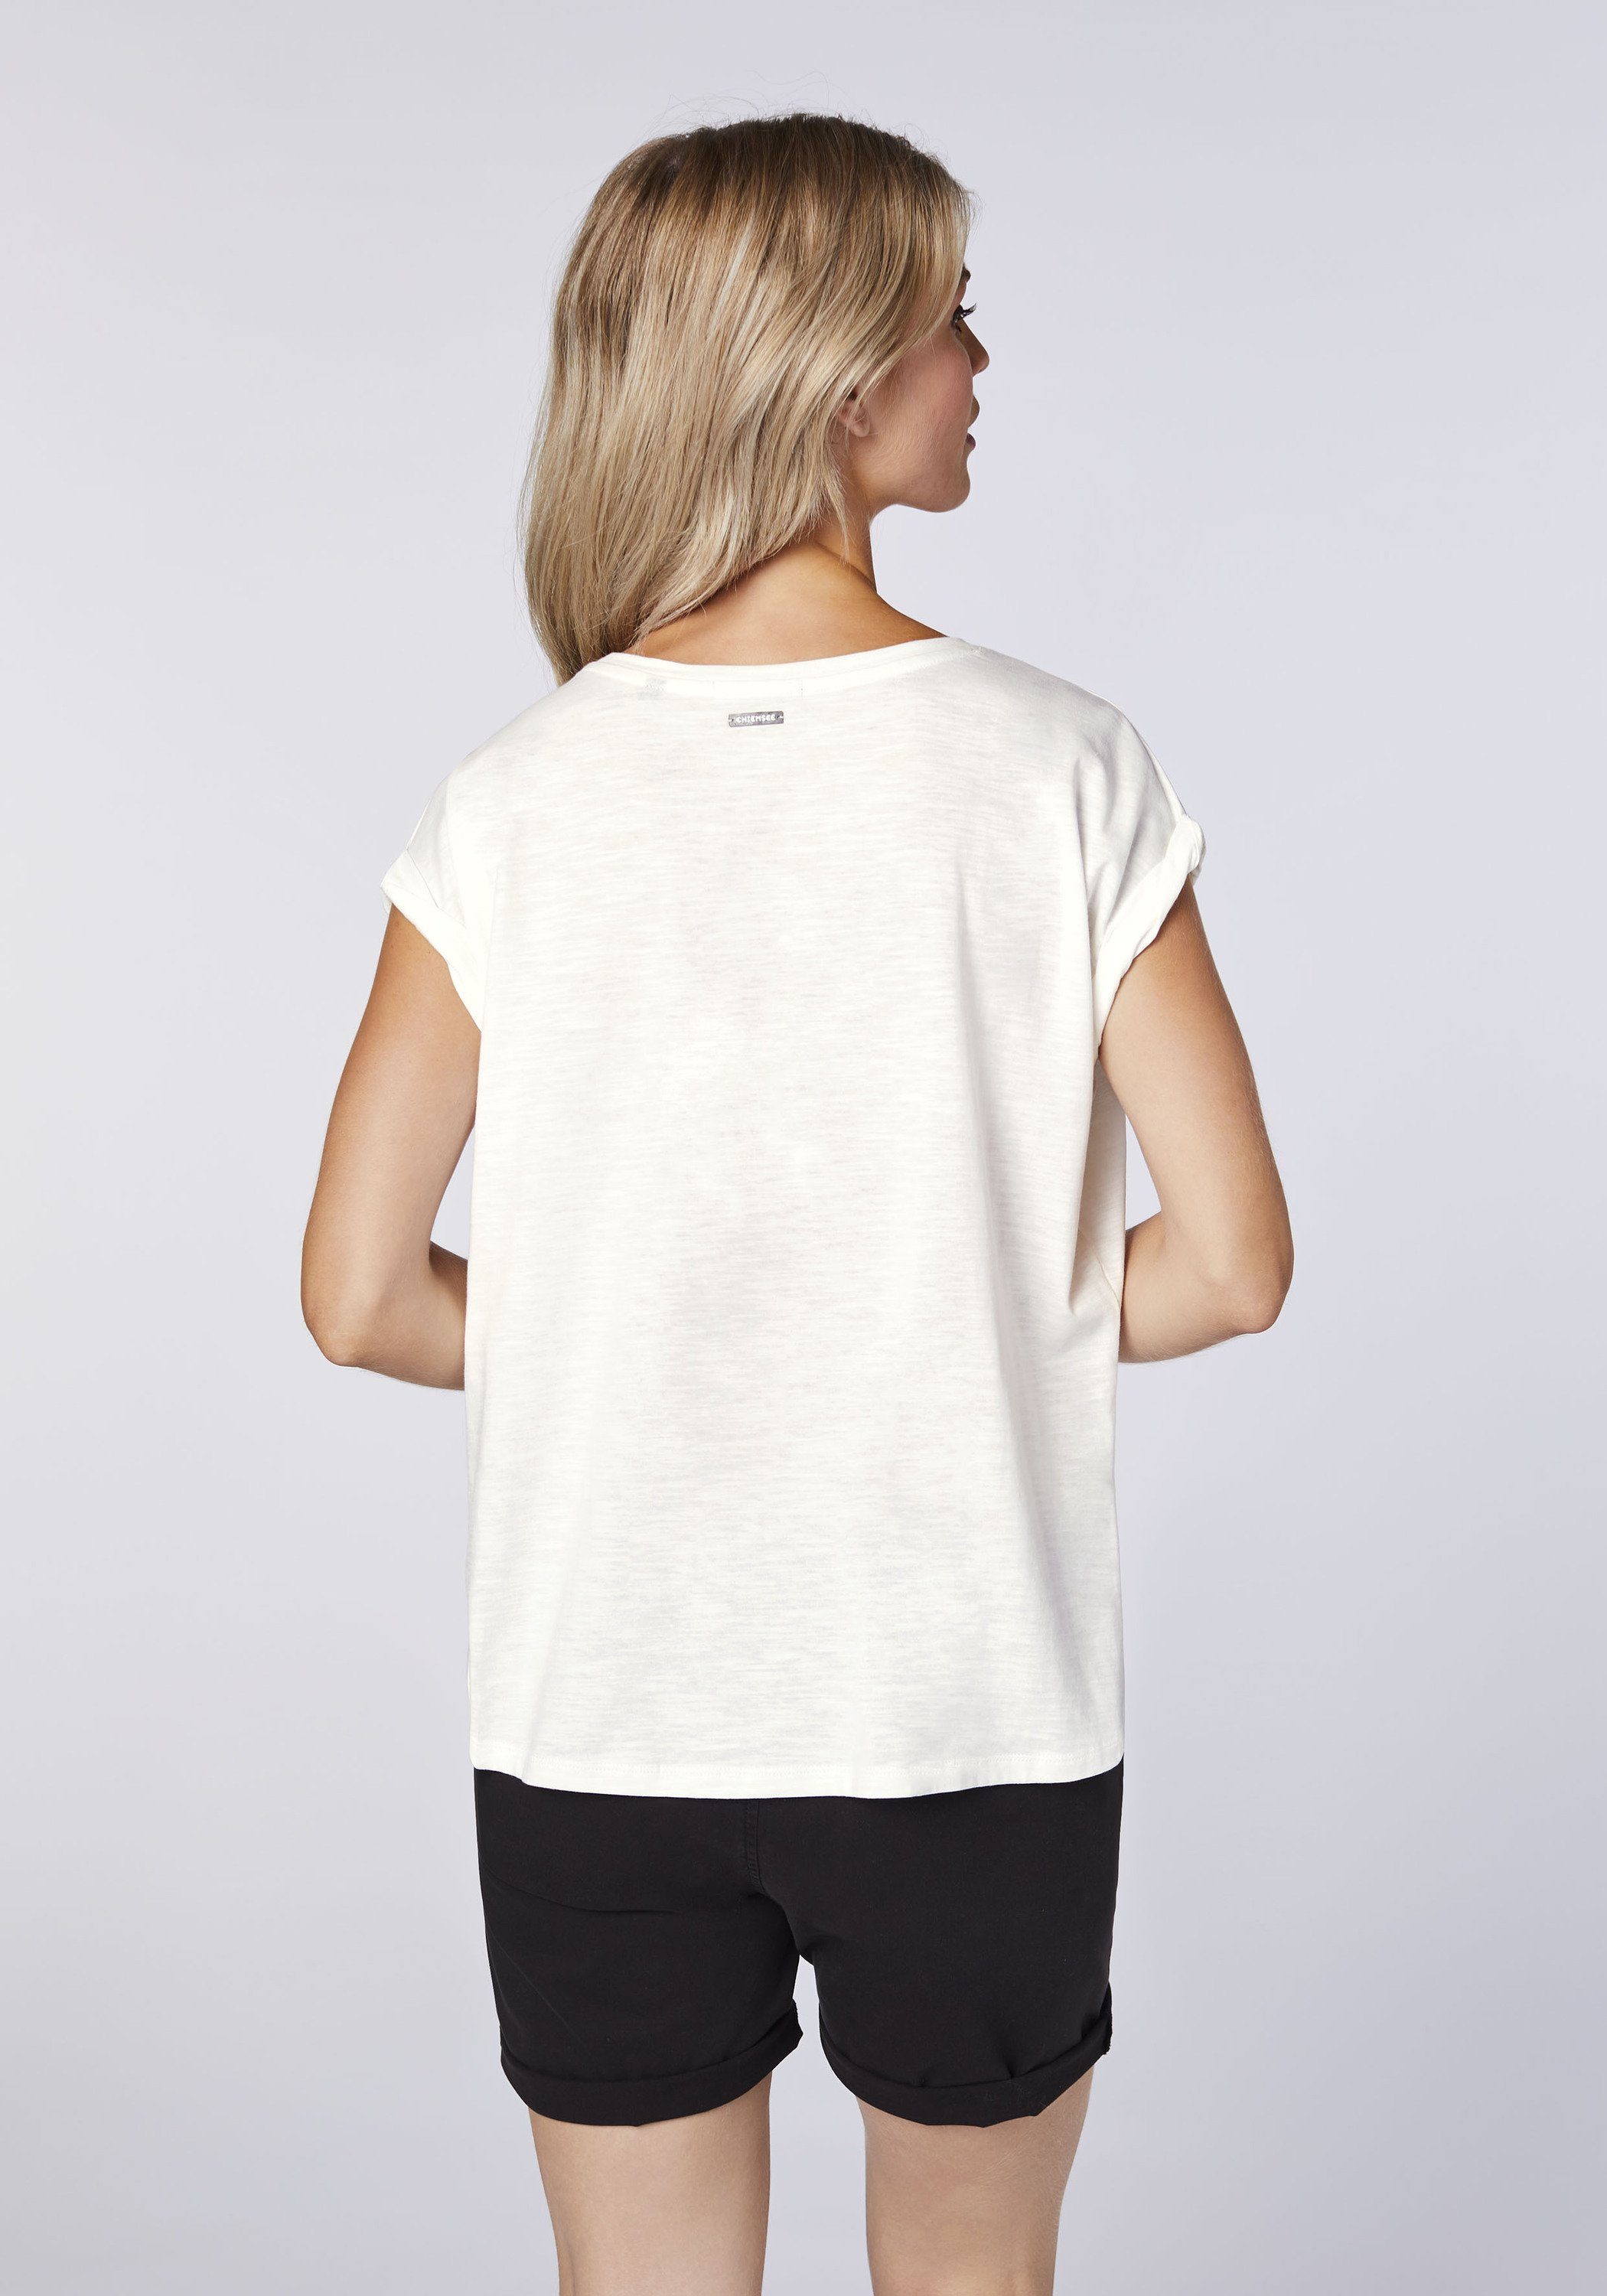 mit Print-Shirt Blue mehrfarbigem Chiemsee T-Shirt 1 White/Med Frontprint